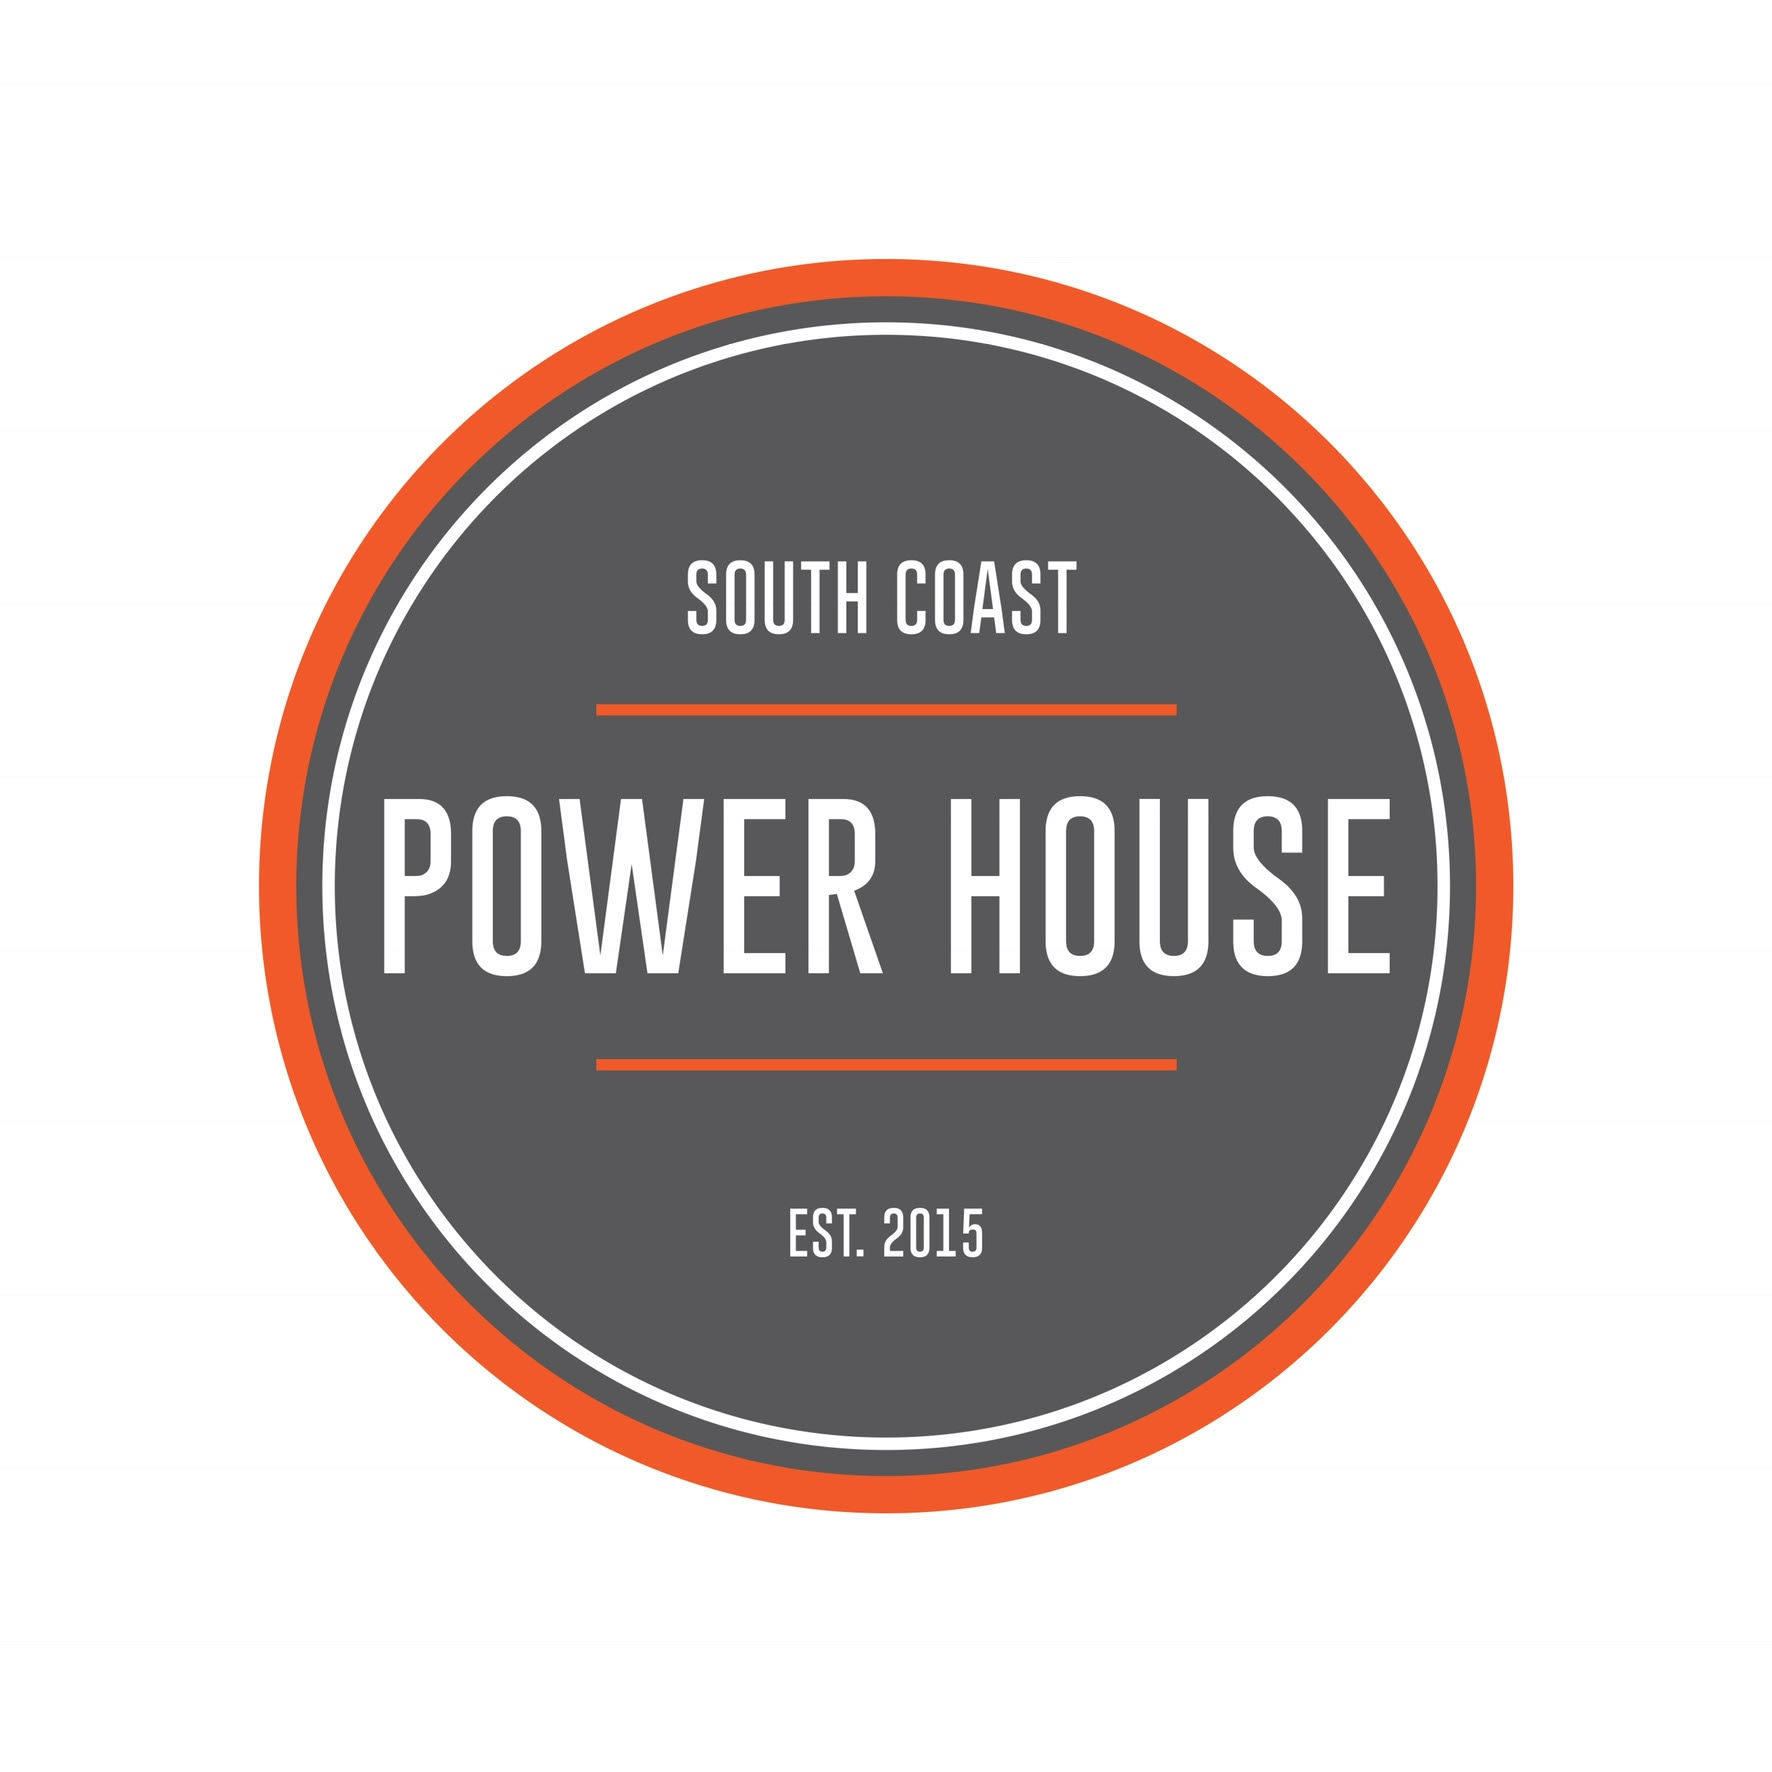 South Coast Power House Bournemouth